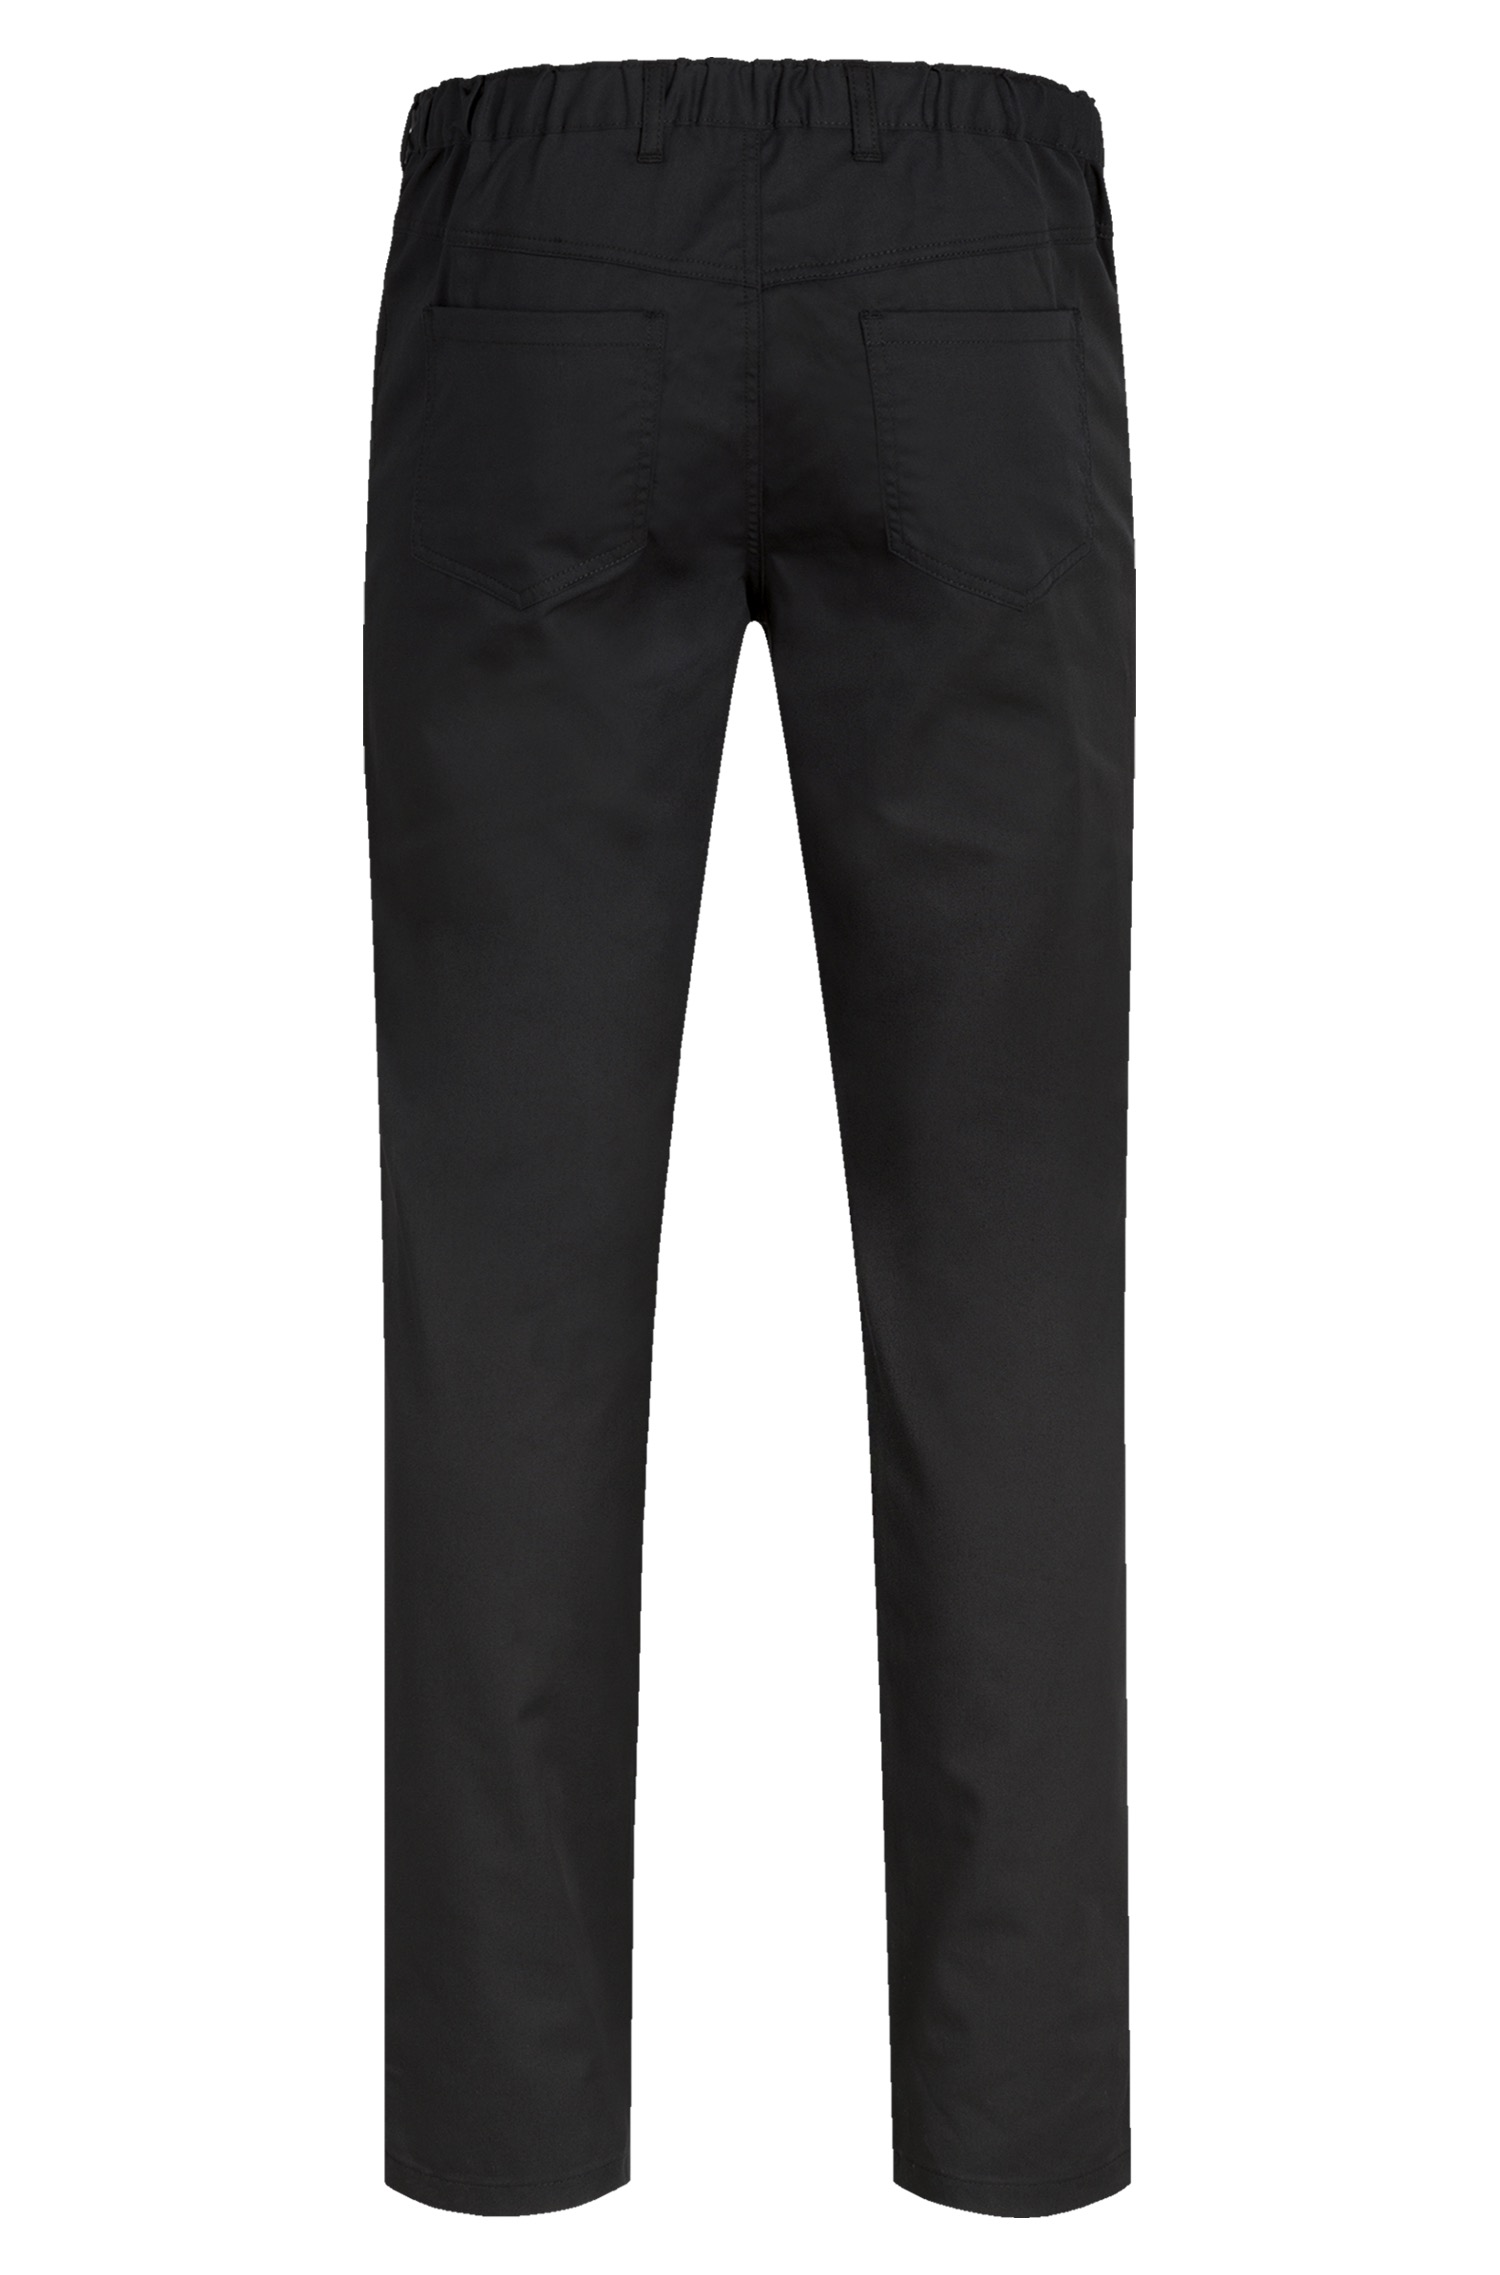 Men's Trousers Regular Fit 5321 Green Button Greiff® Black 56